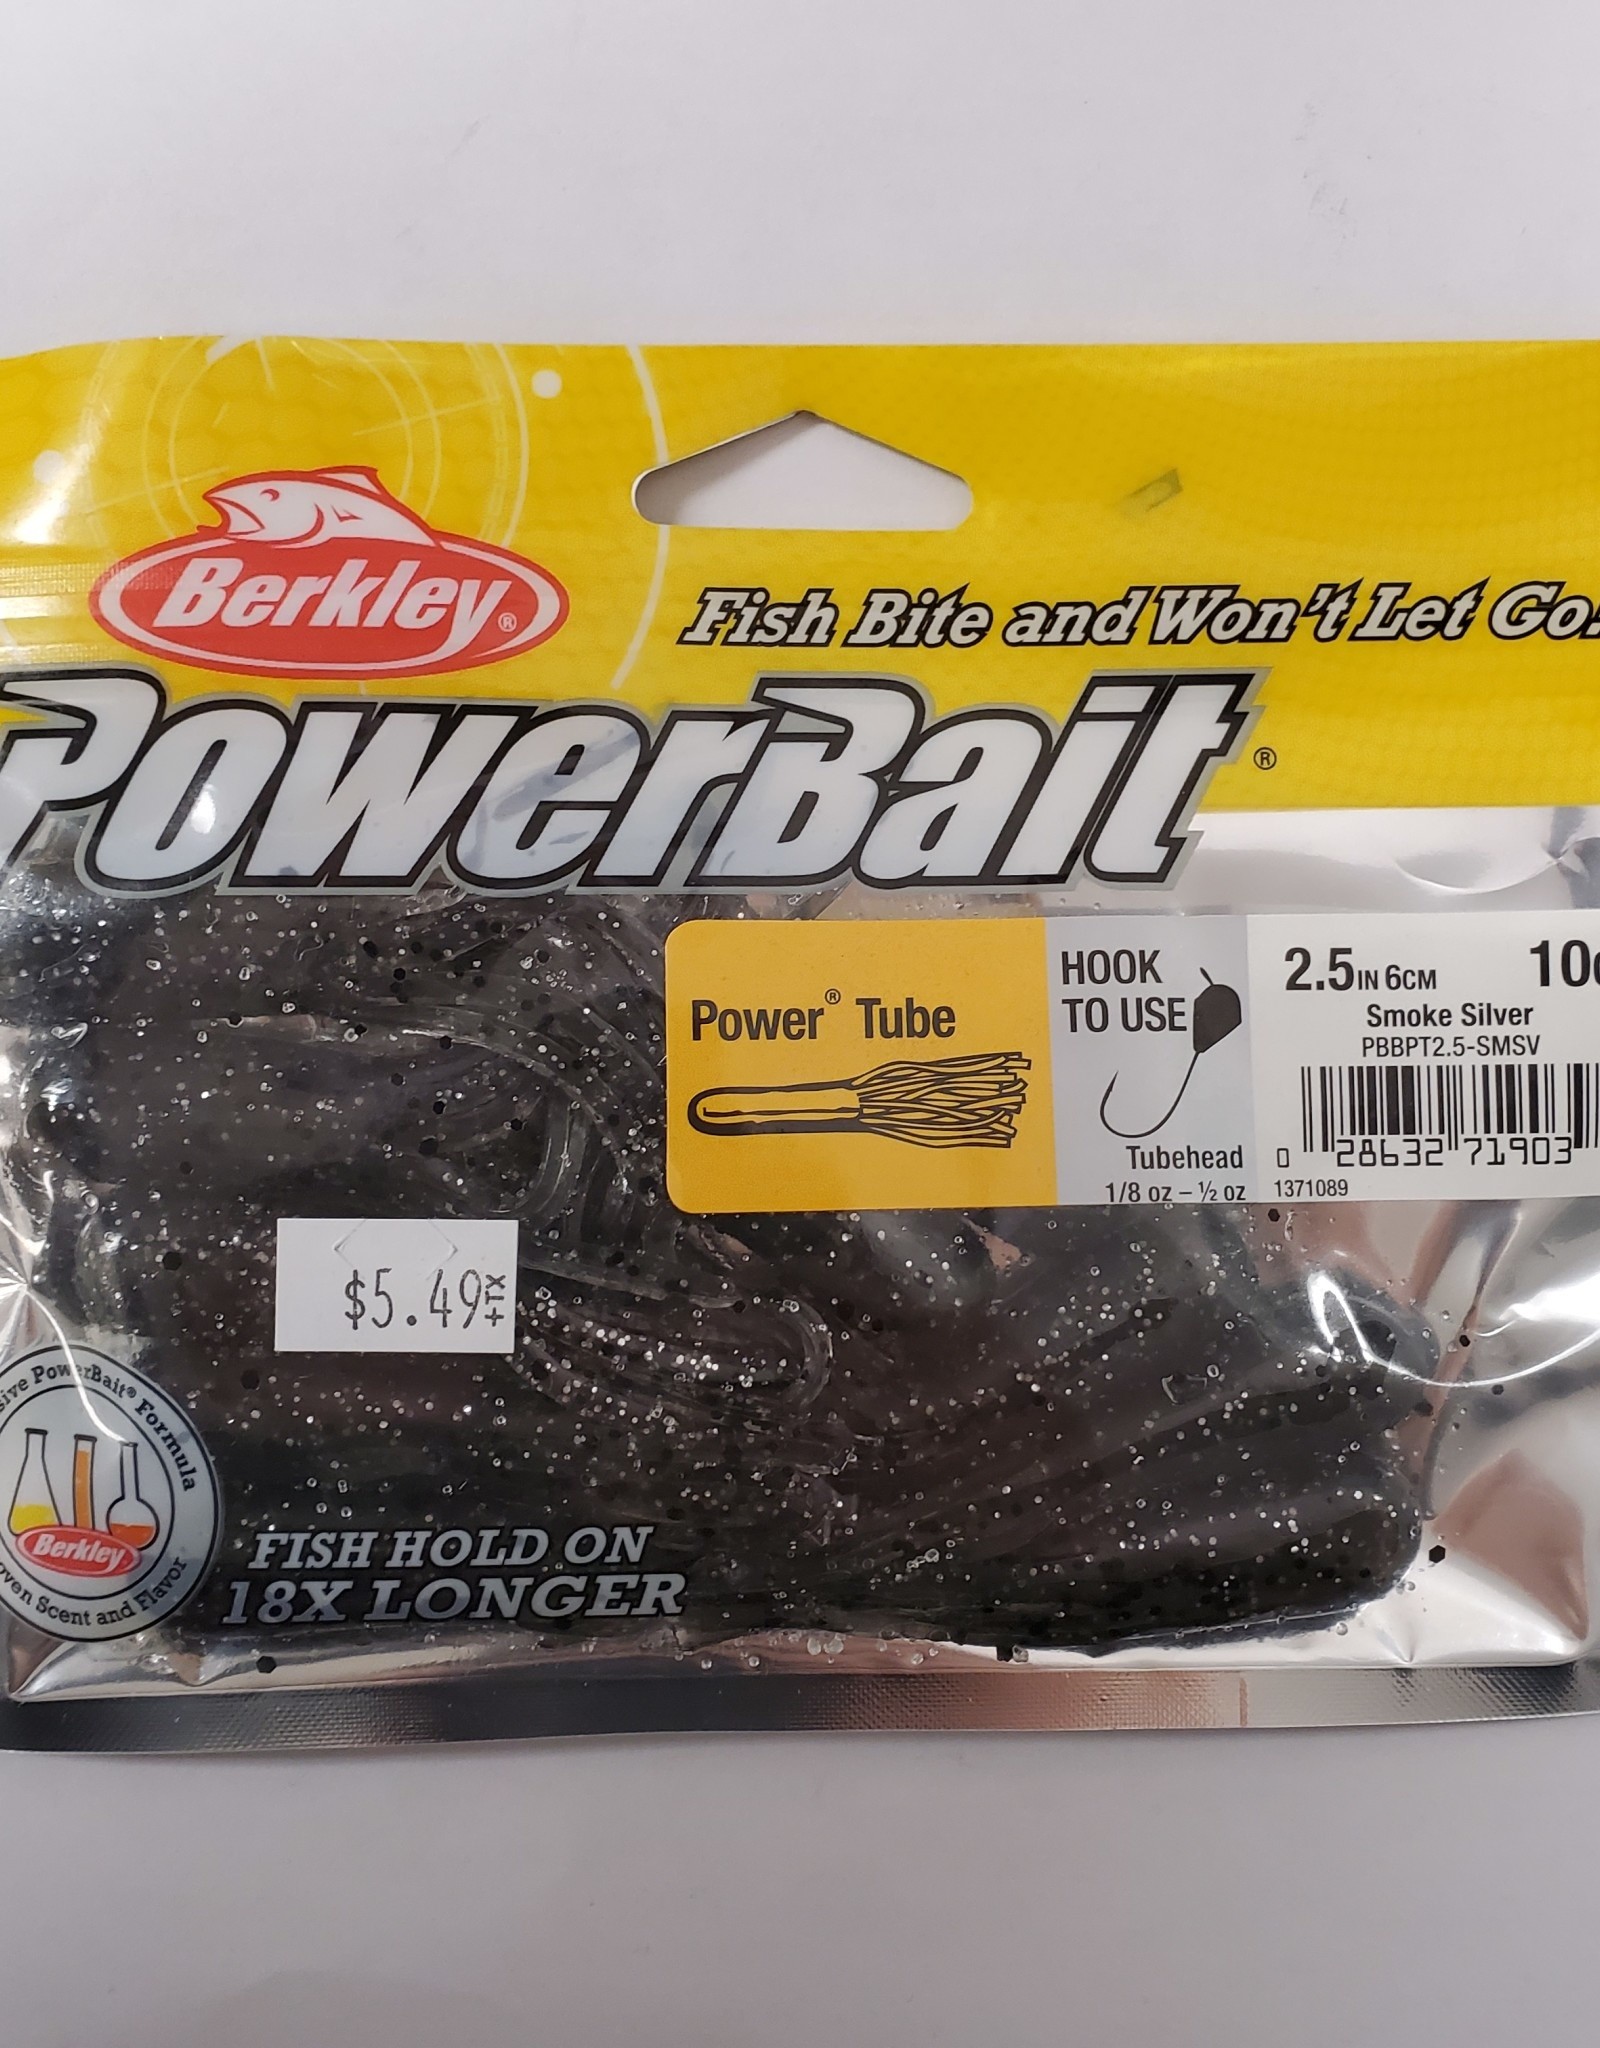 Berkley Power tube 2.5 smoke silver 10pk - Fehrs Sporting Goods Inc.